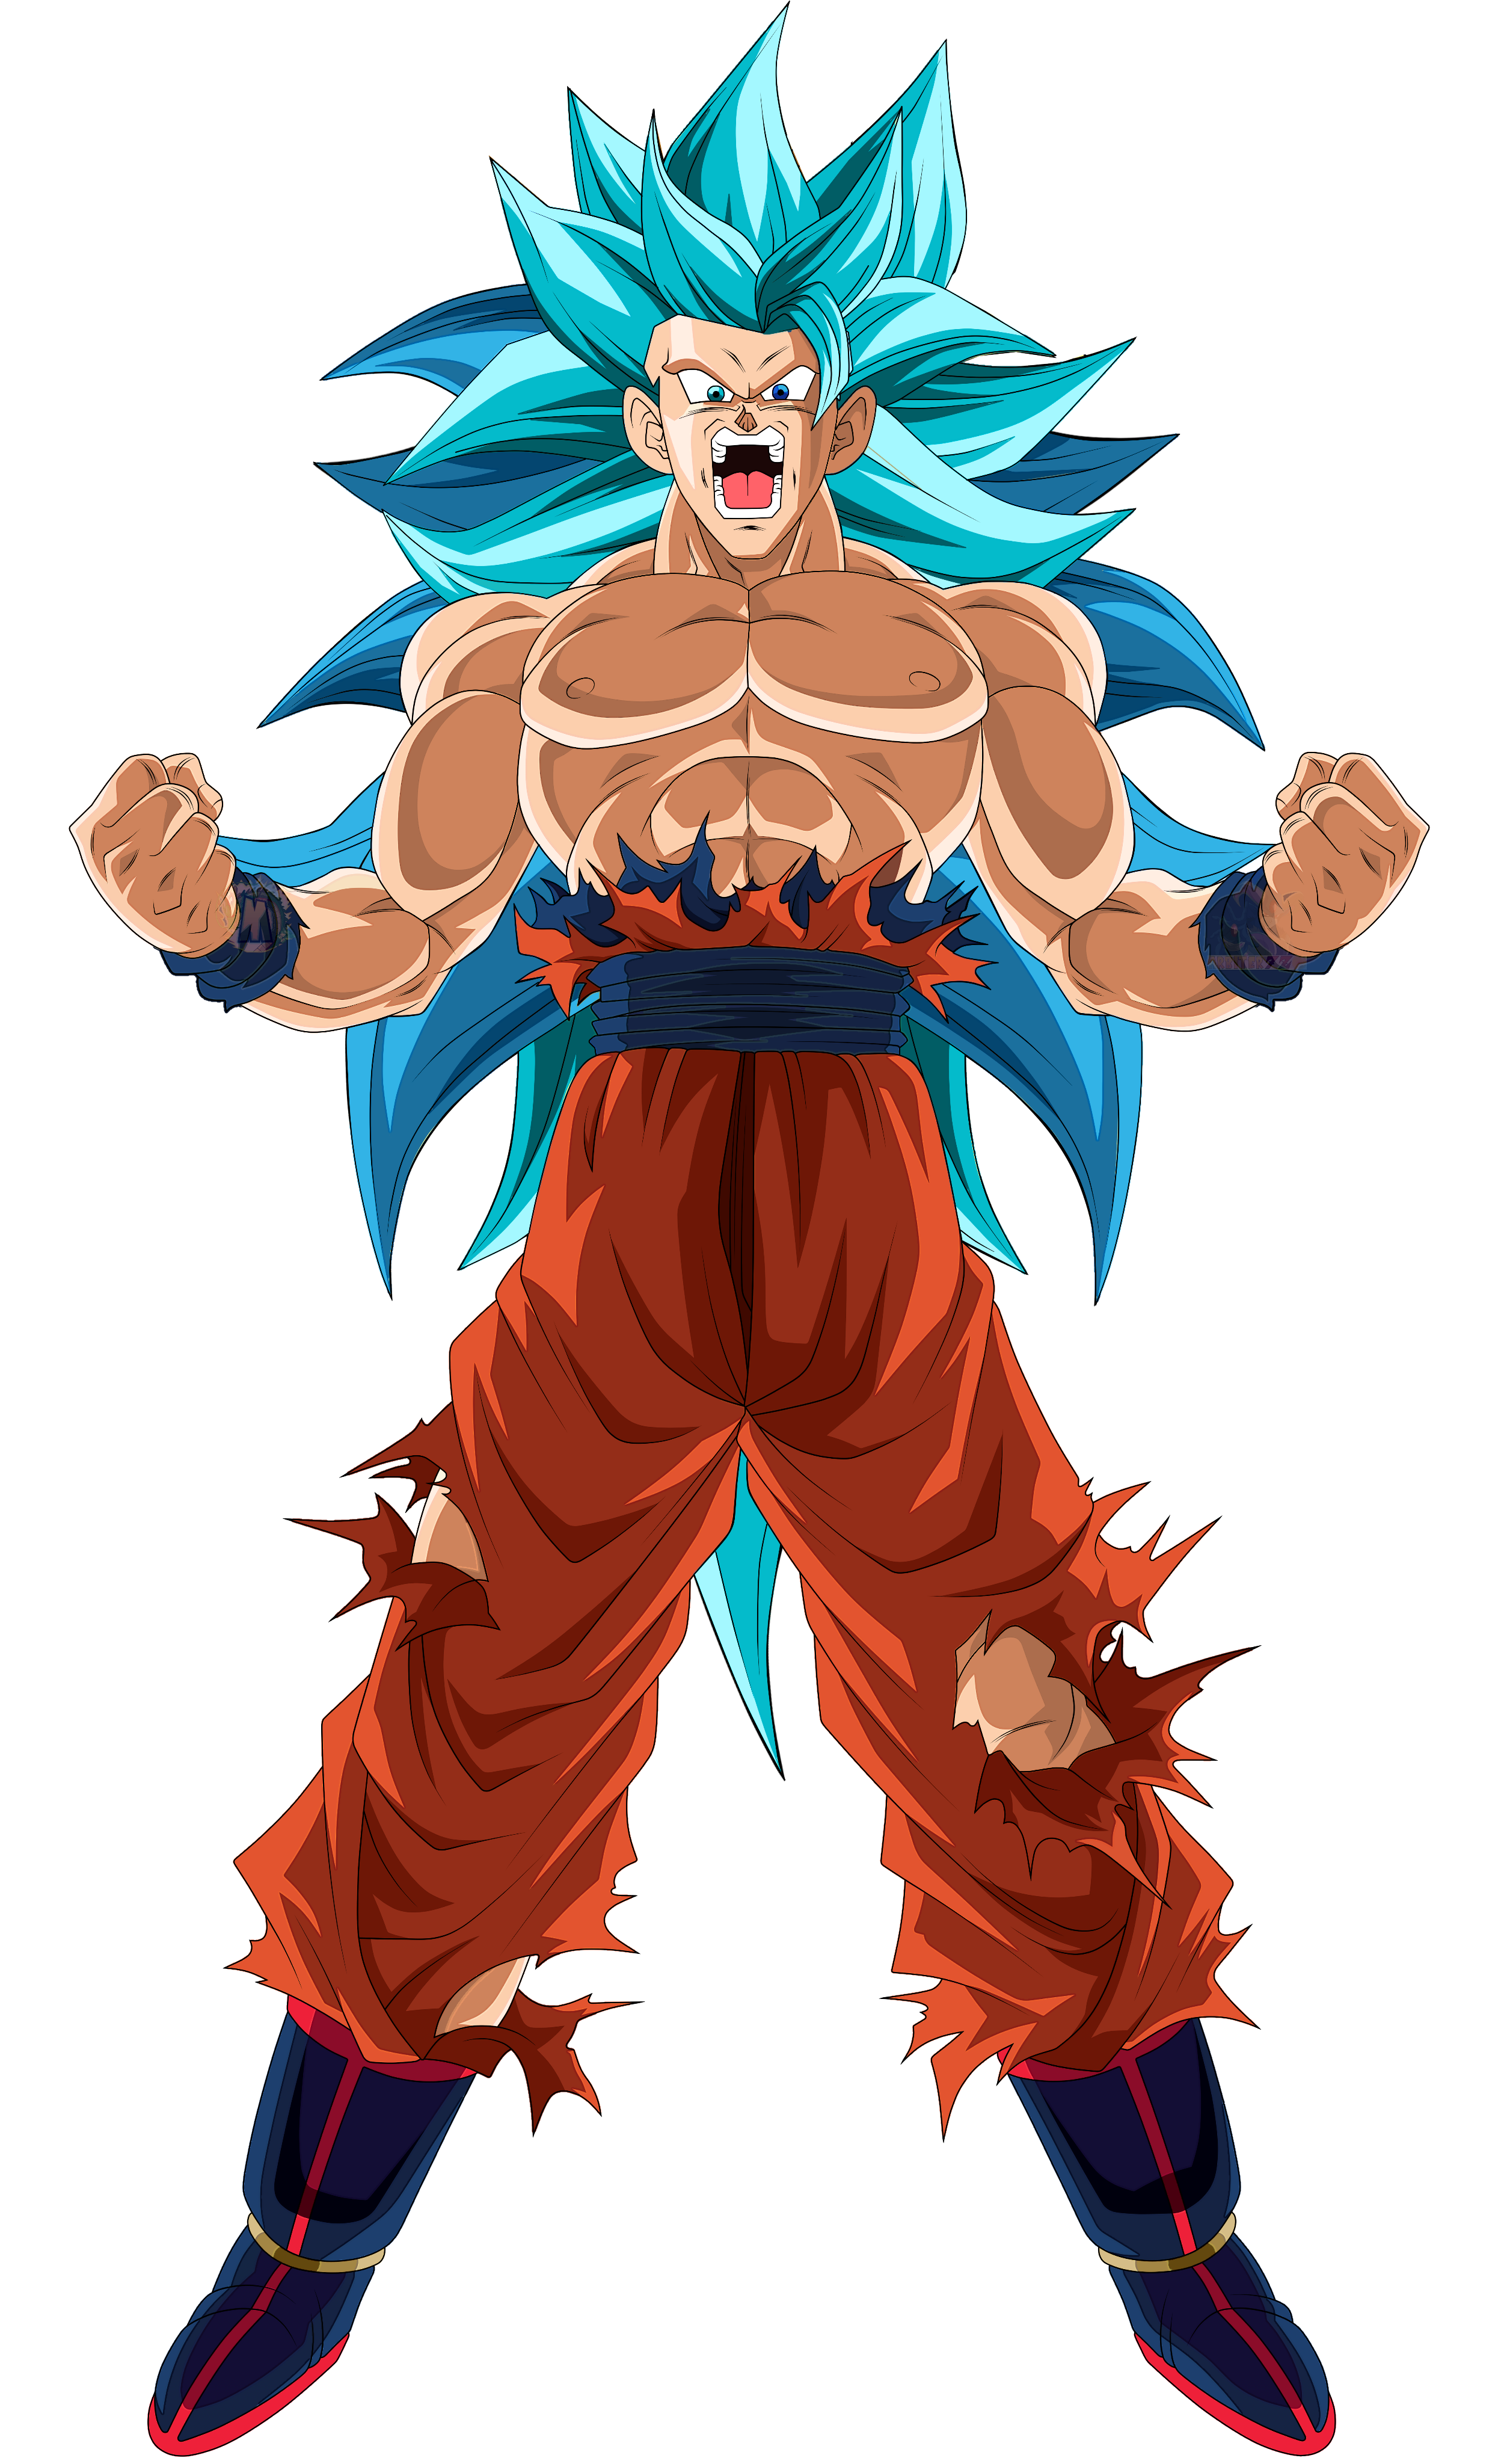 Goku SSJ Blue Evolution Render by GokuLSSlegendary on DeviantArt